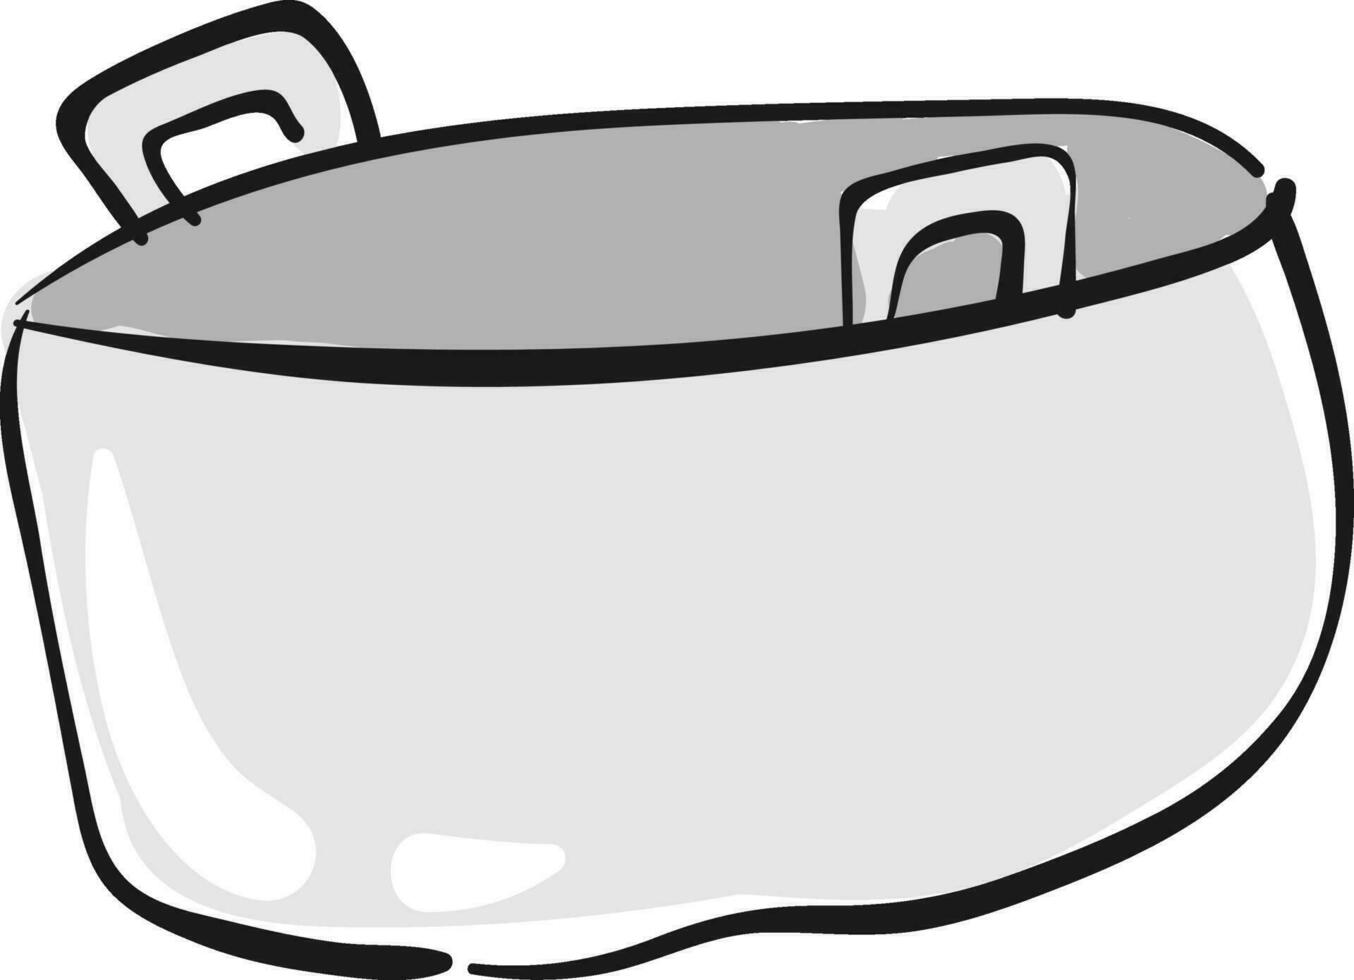 White saucepan, vector or color illustration.